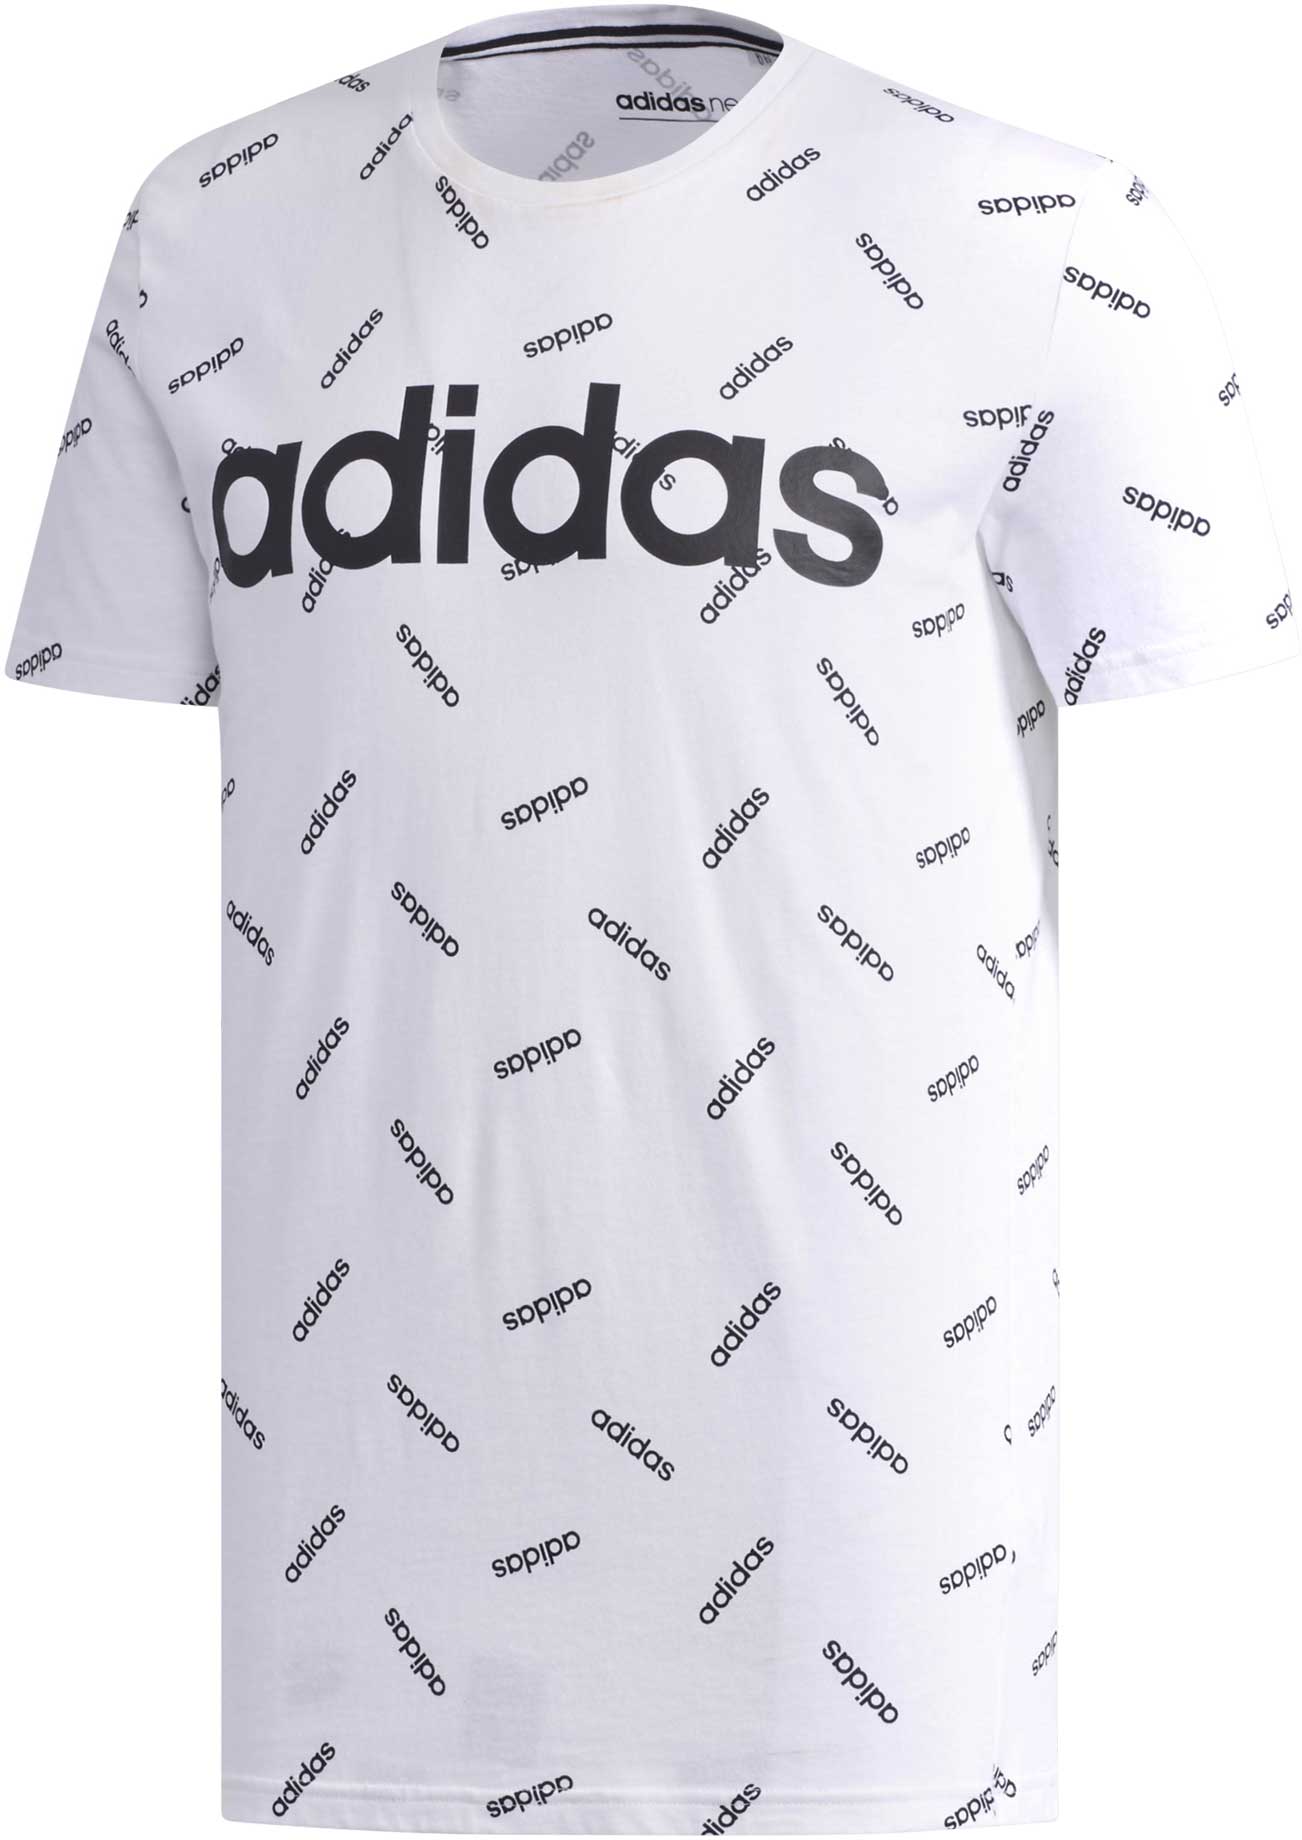 adidas print shirt